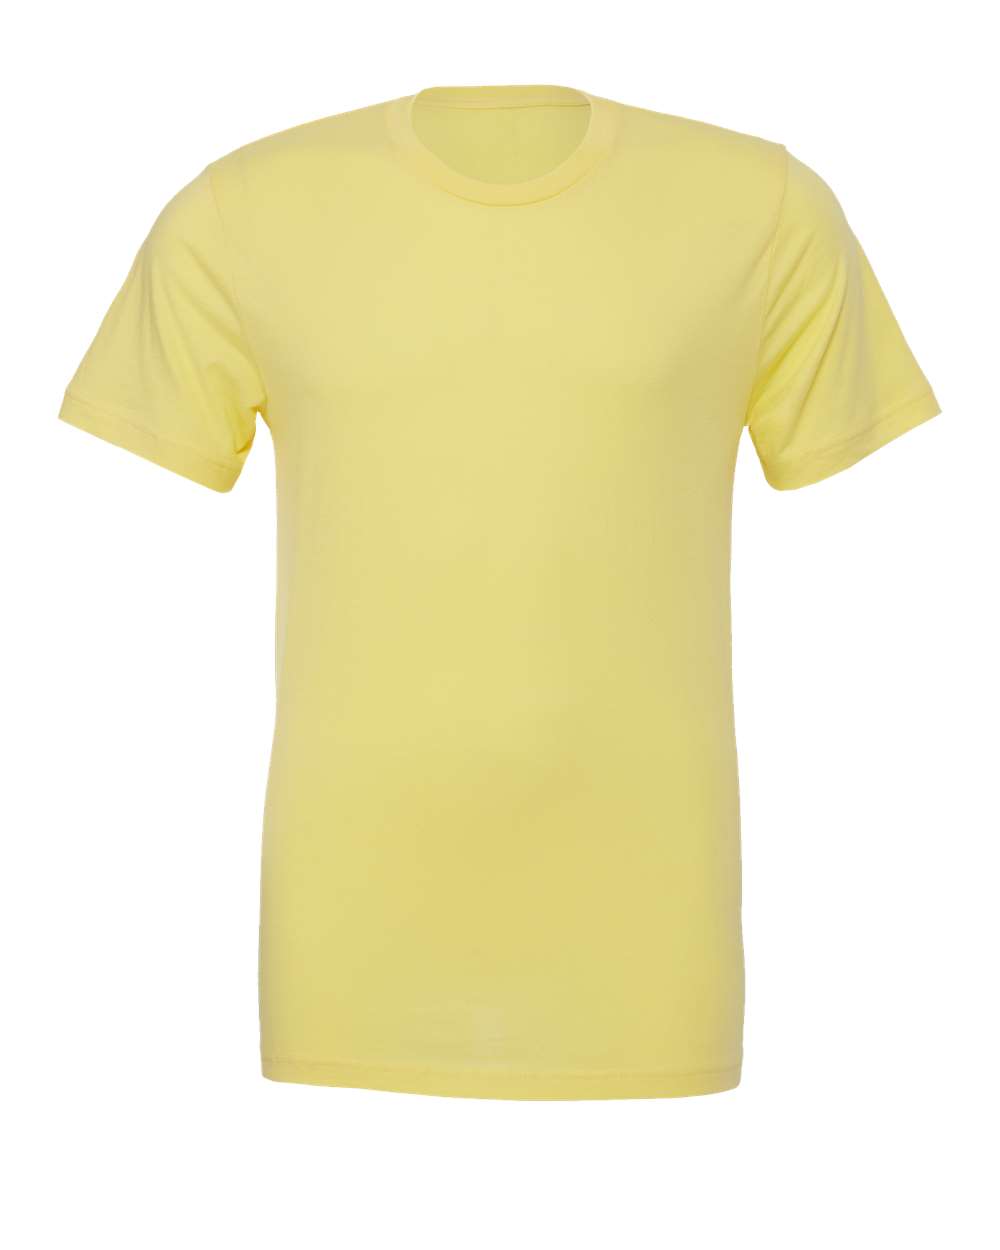 "Build A Tee" Light Colors - Bella Canvas Short Sleeve T-Shirt